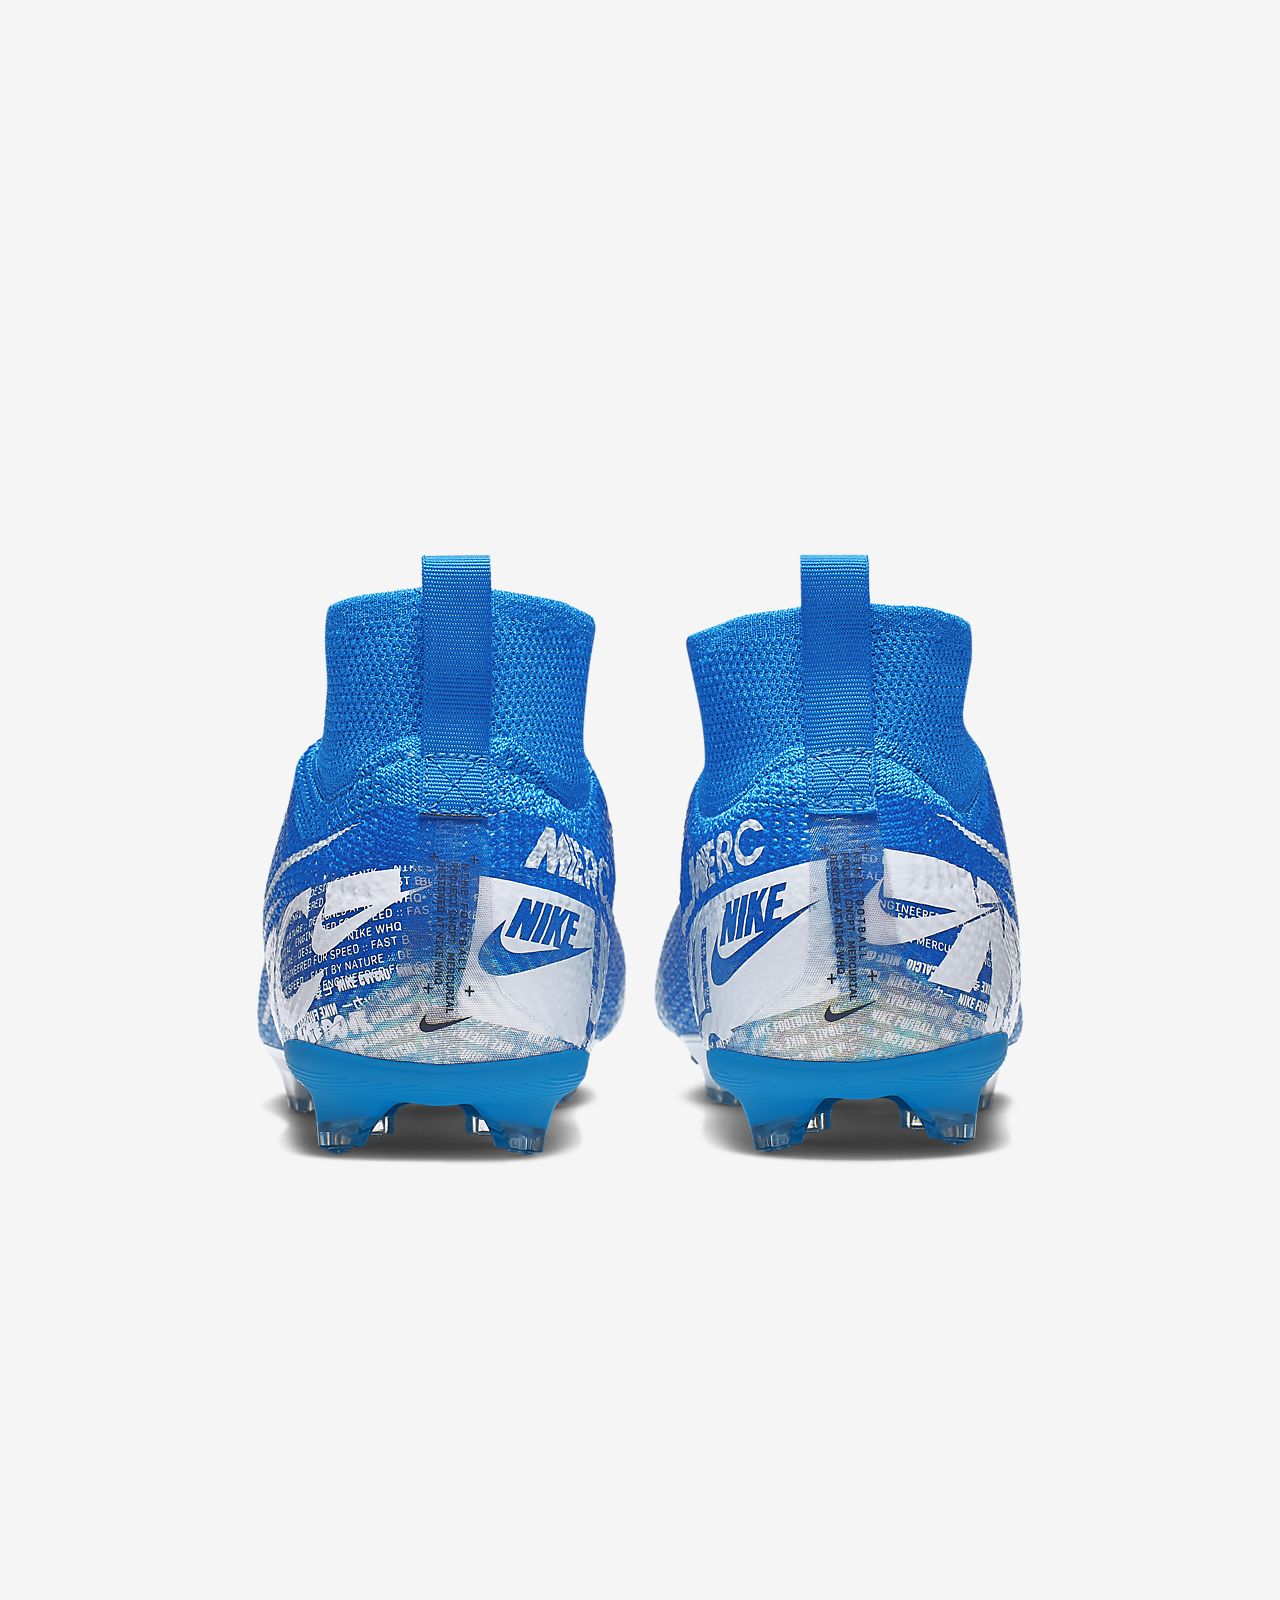 Nike Mercurial Superfly VI Elite LVL UP Soccer Shoes.